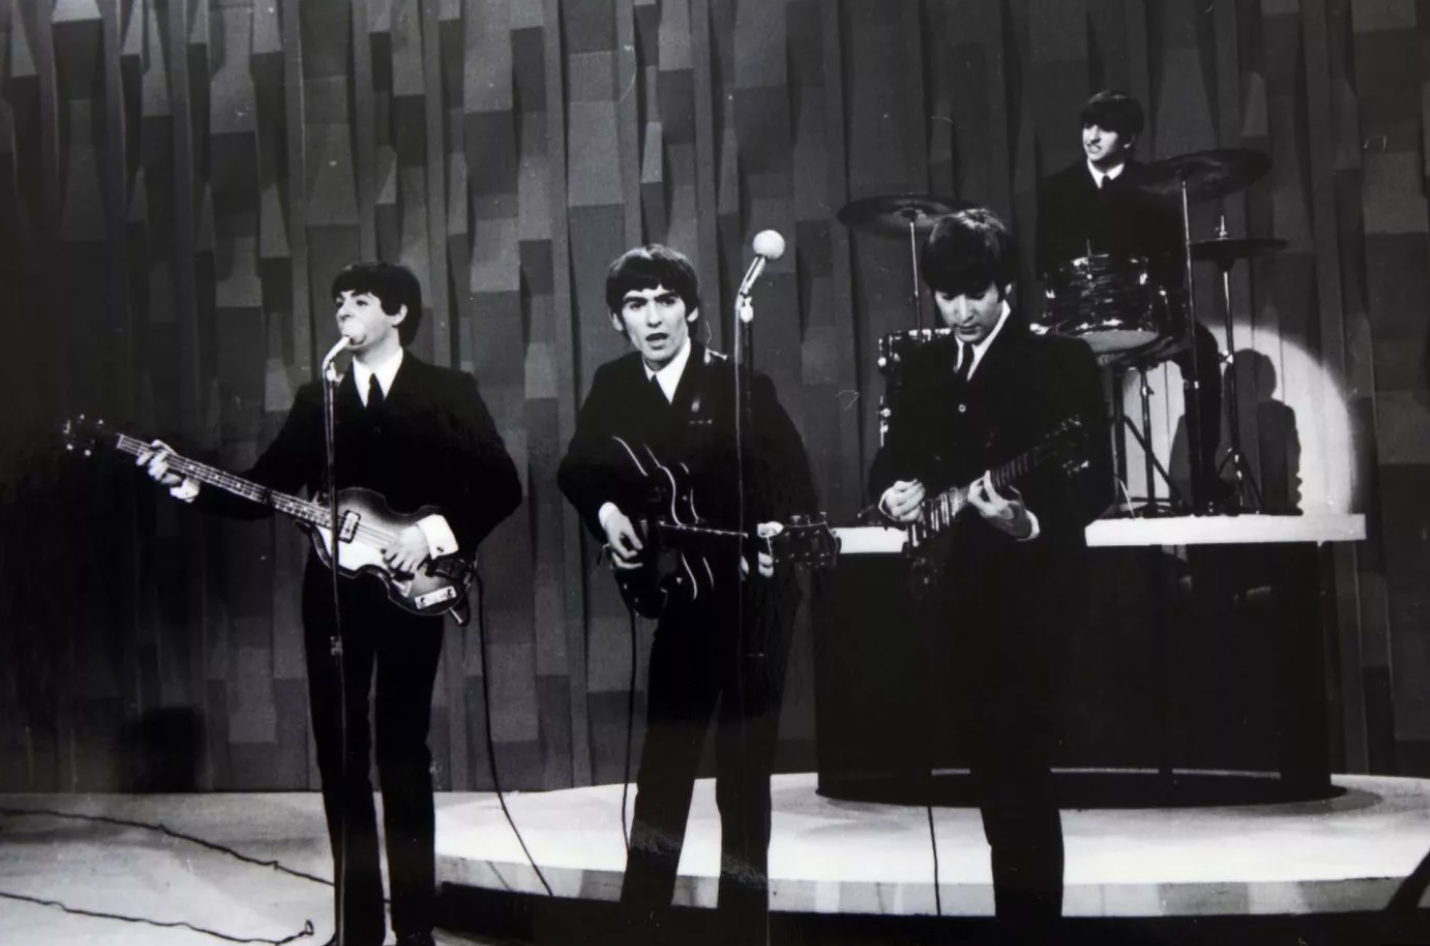 1965: Os Beatles vão tocar no Brasil! – PORTAL BEATLES BRASIL